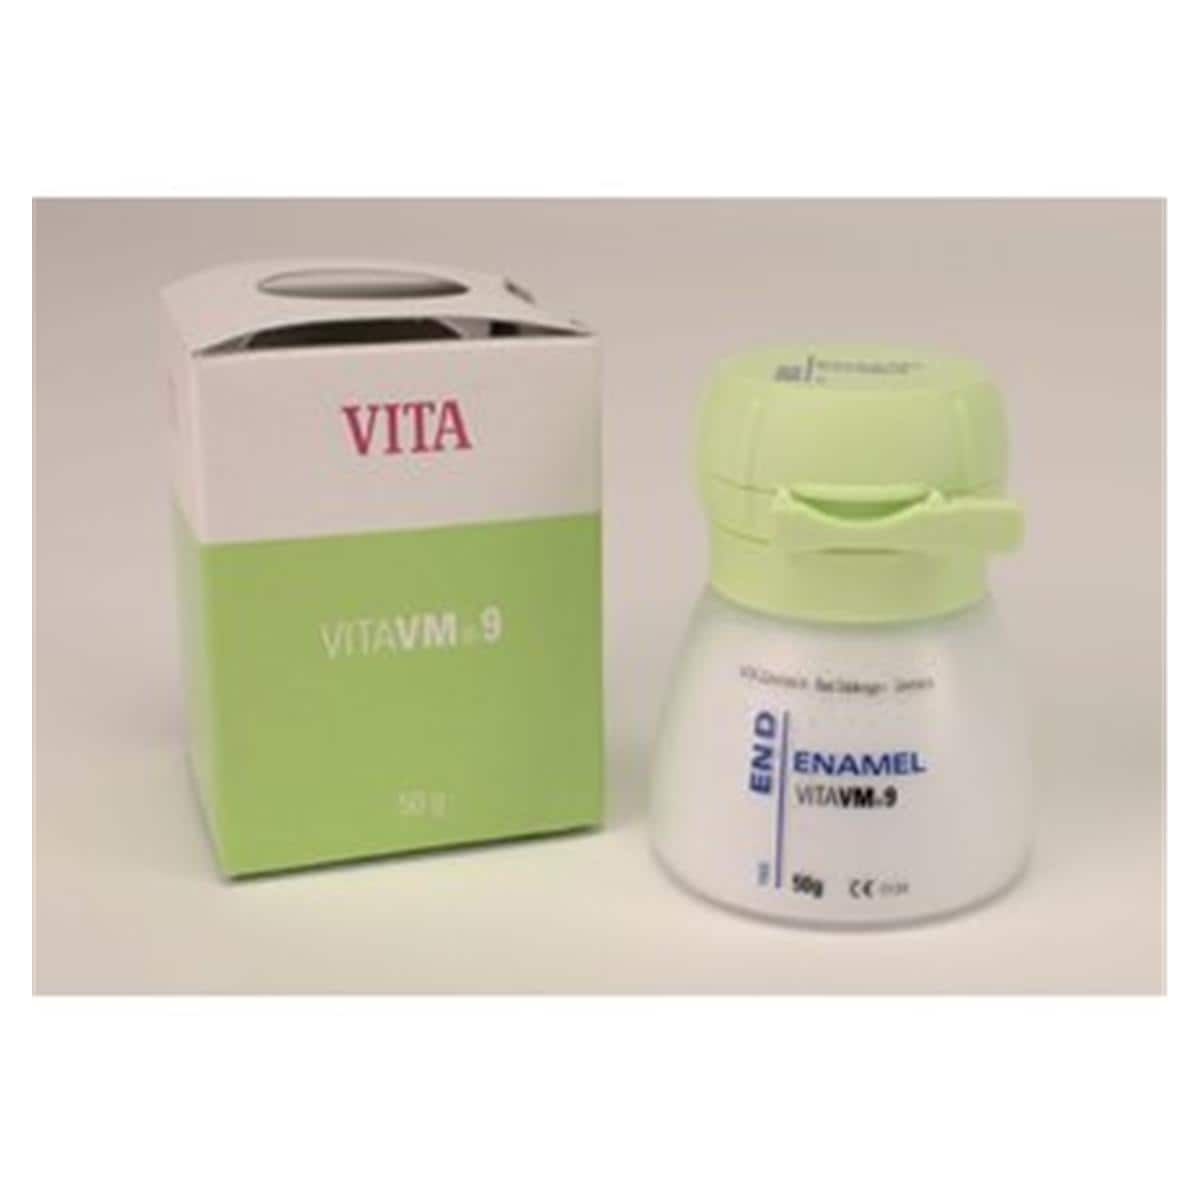 VM9 VITA - Enamel - END - Le pot de 50 g